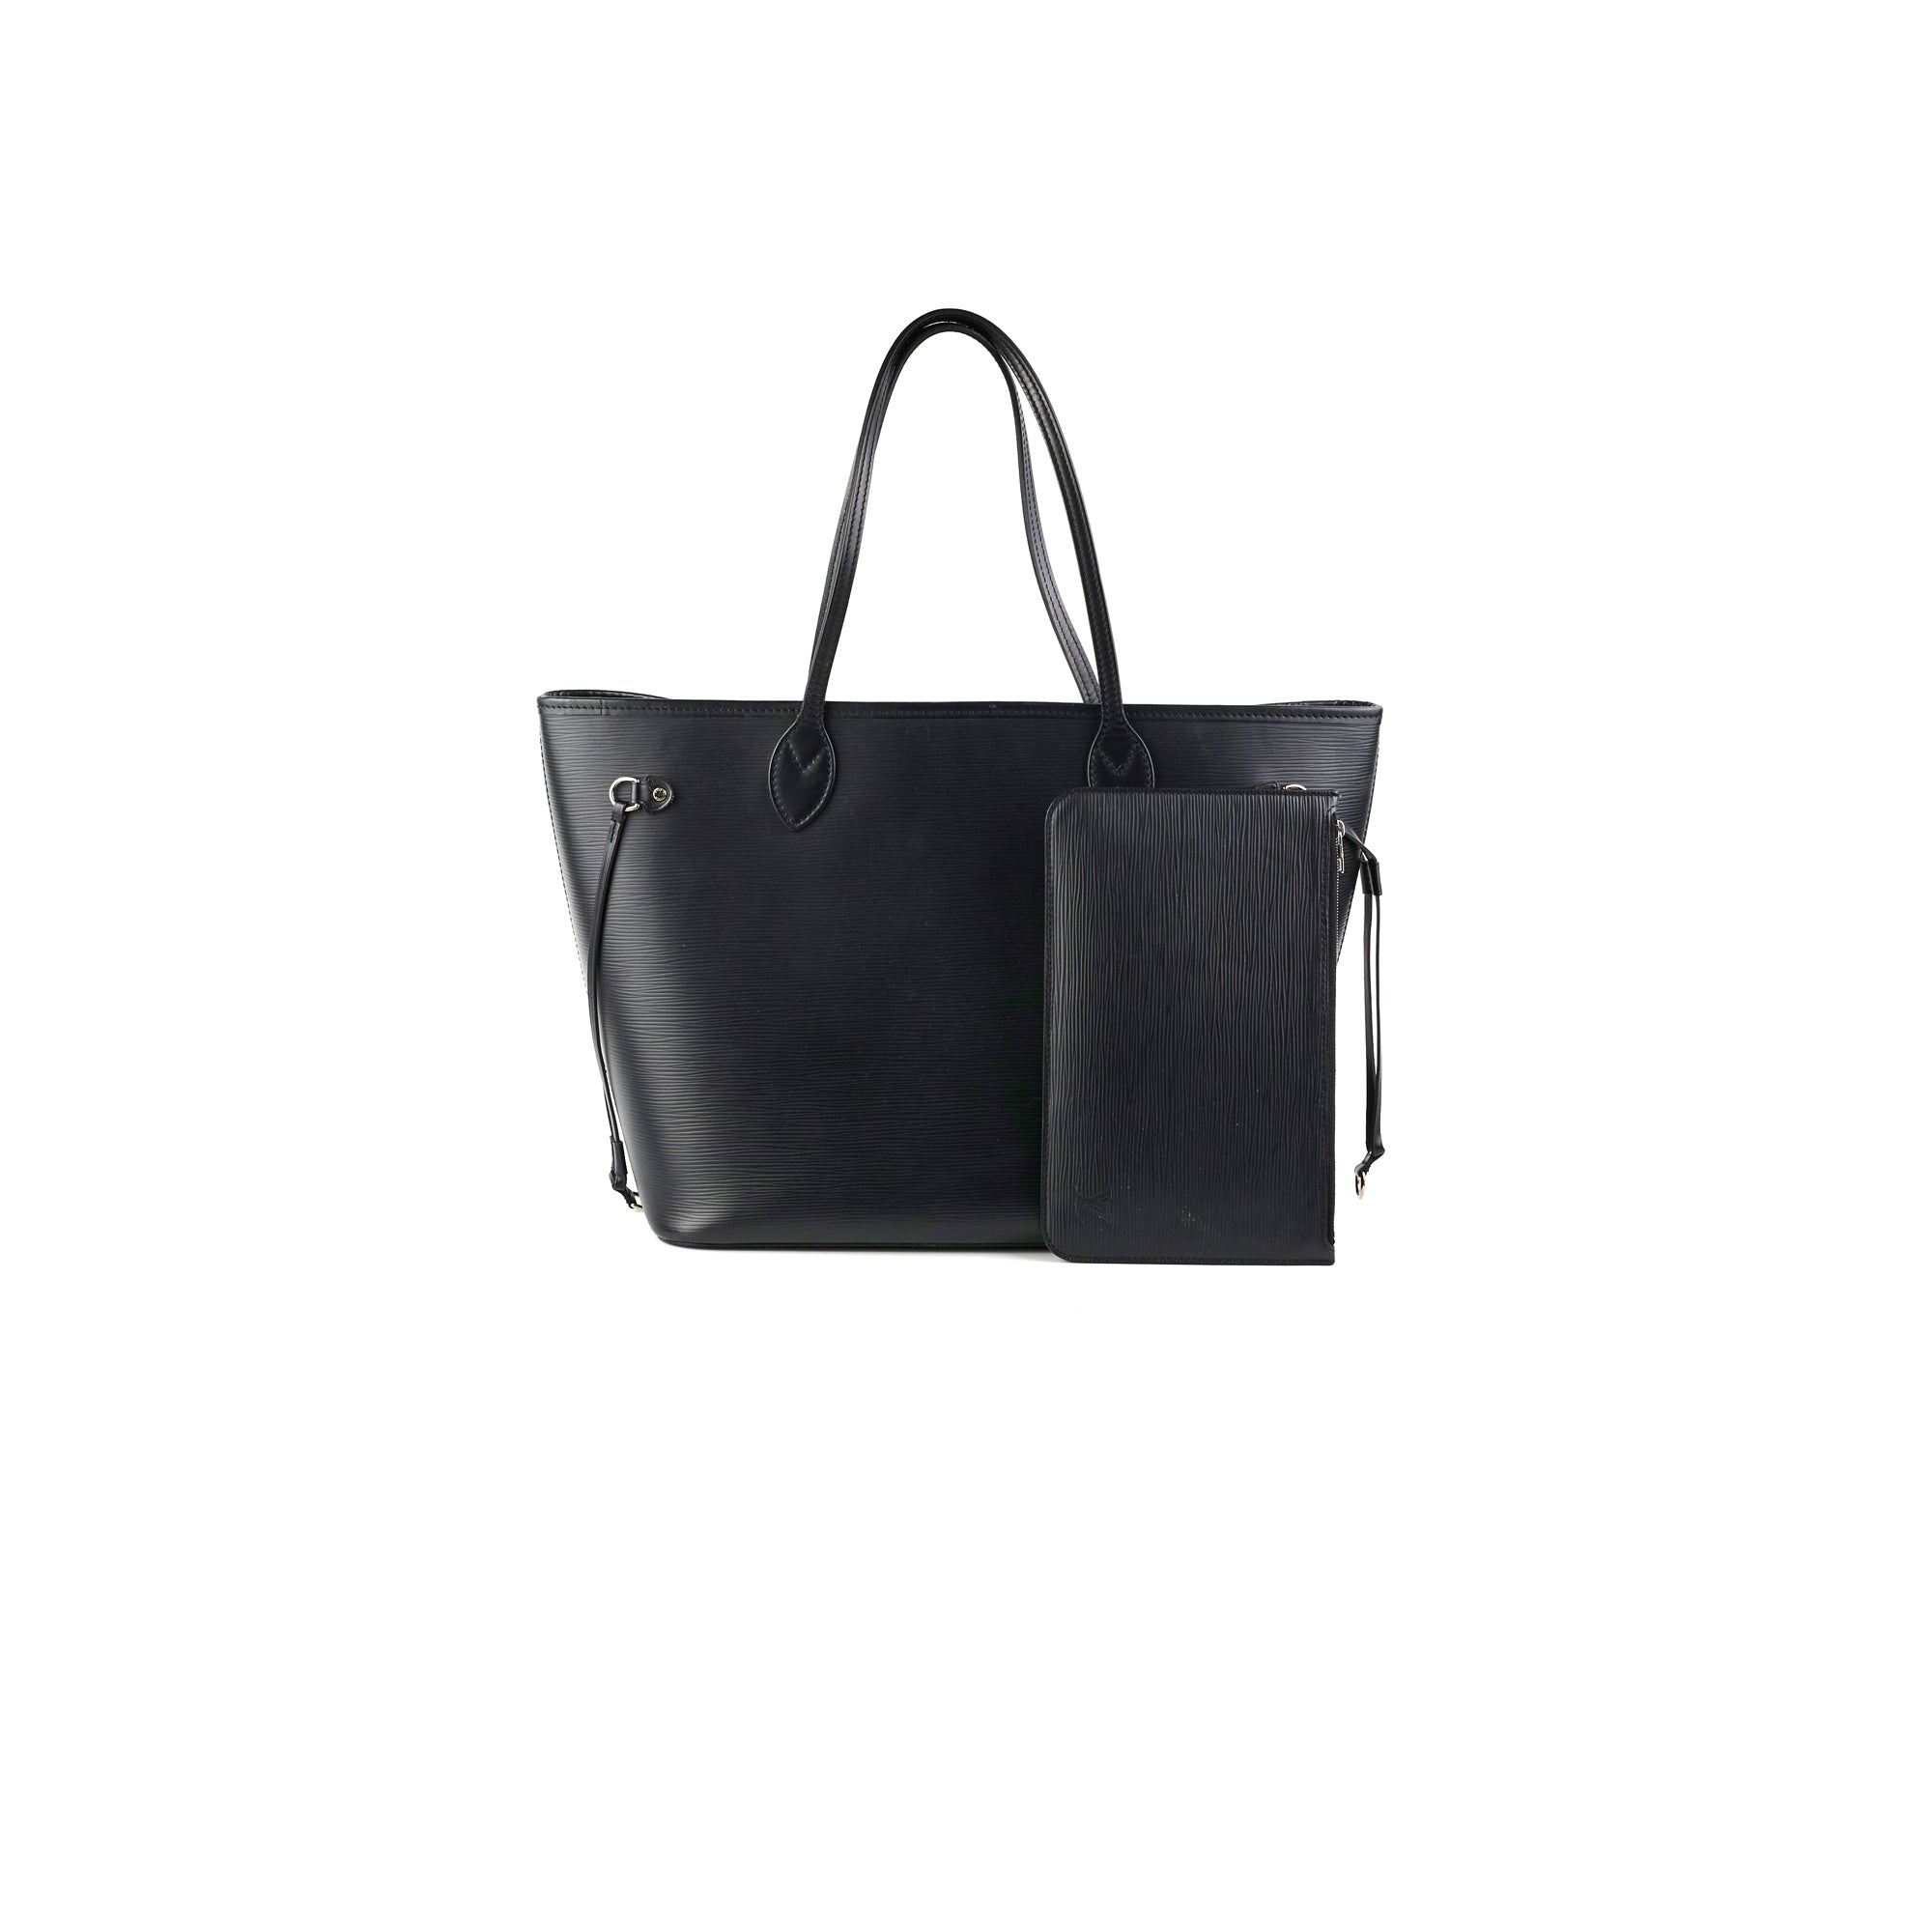 Louis Vuitton Since 1854 Neverfull MM Shoulder Bag - THE PURSE AFFAIR